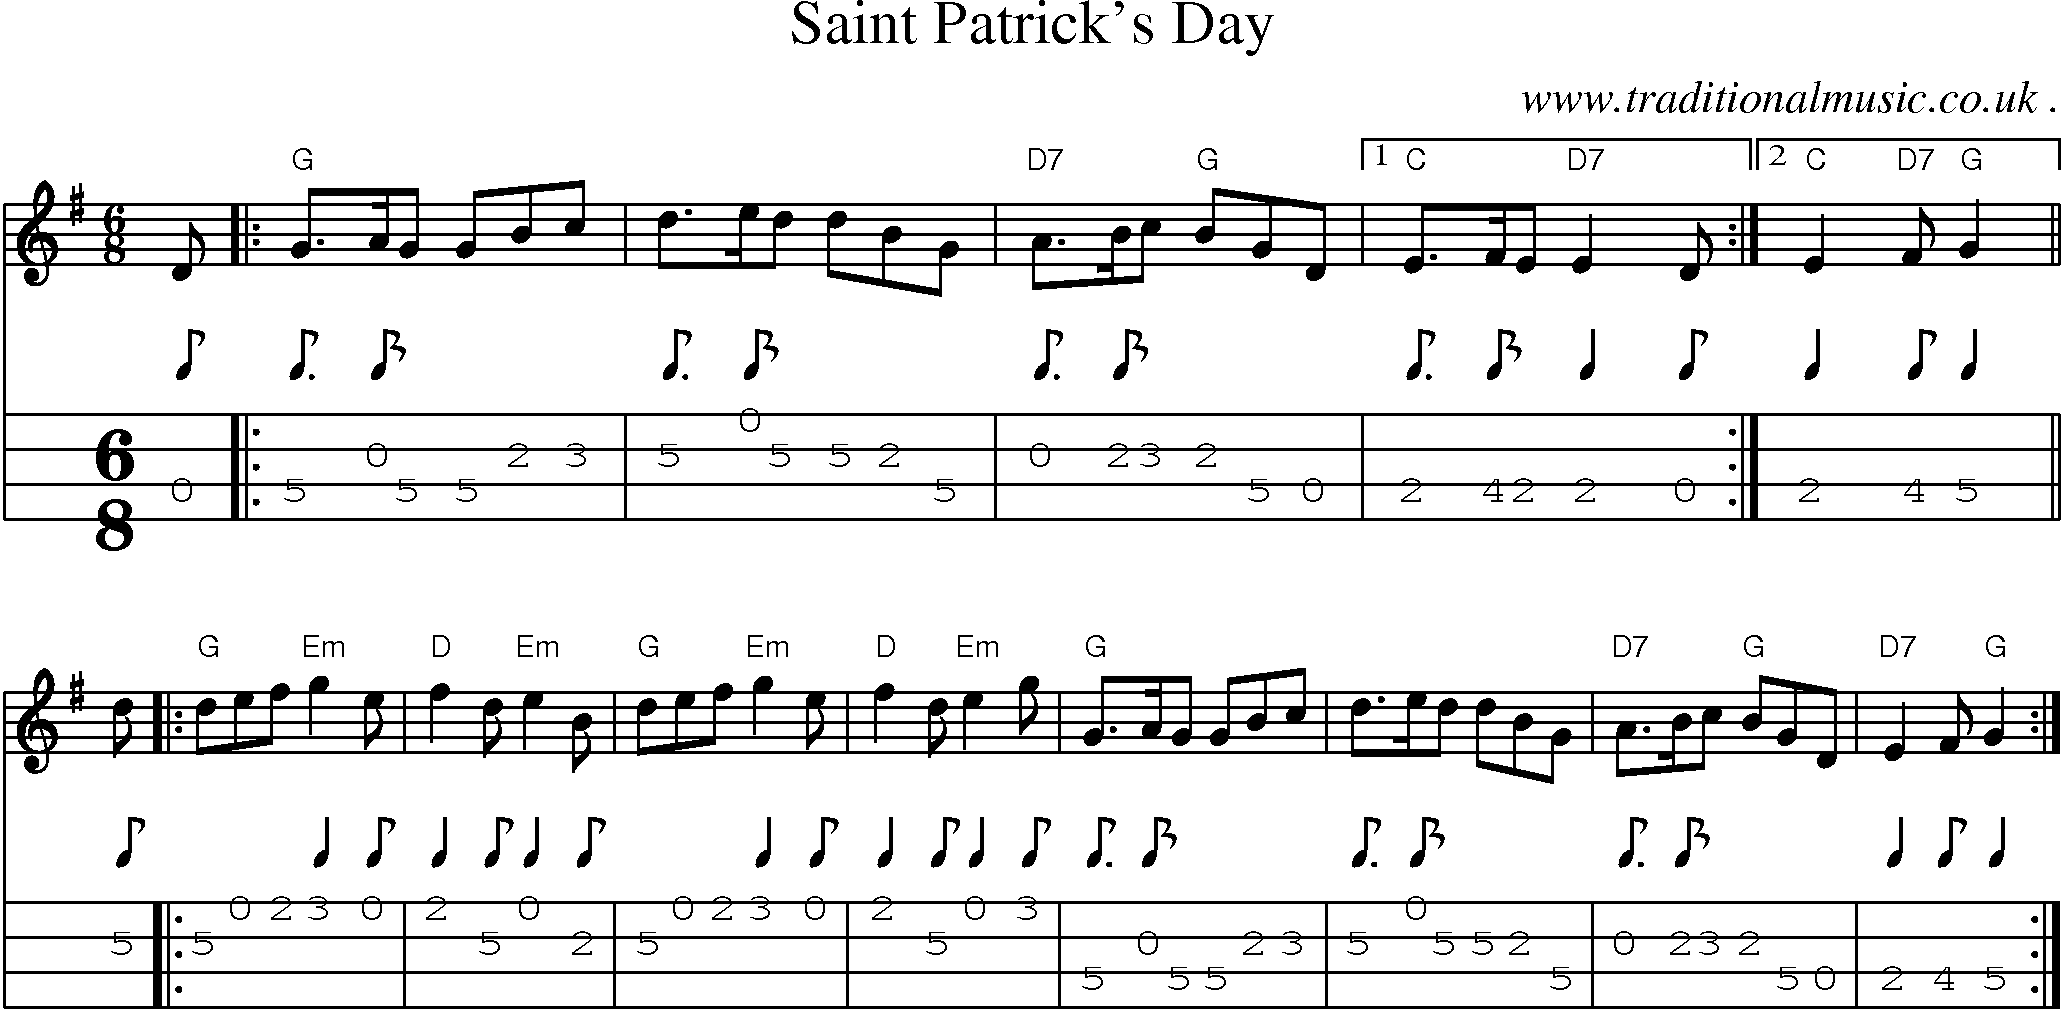 Sheet-music  score, Chords and Mandolin Tabs for Saint Patricks Day